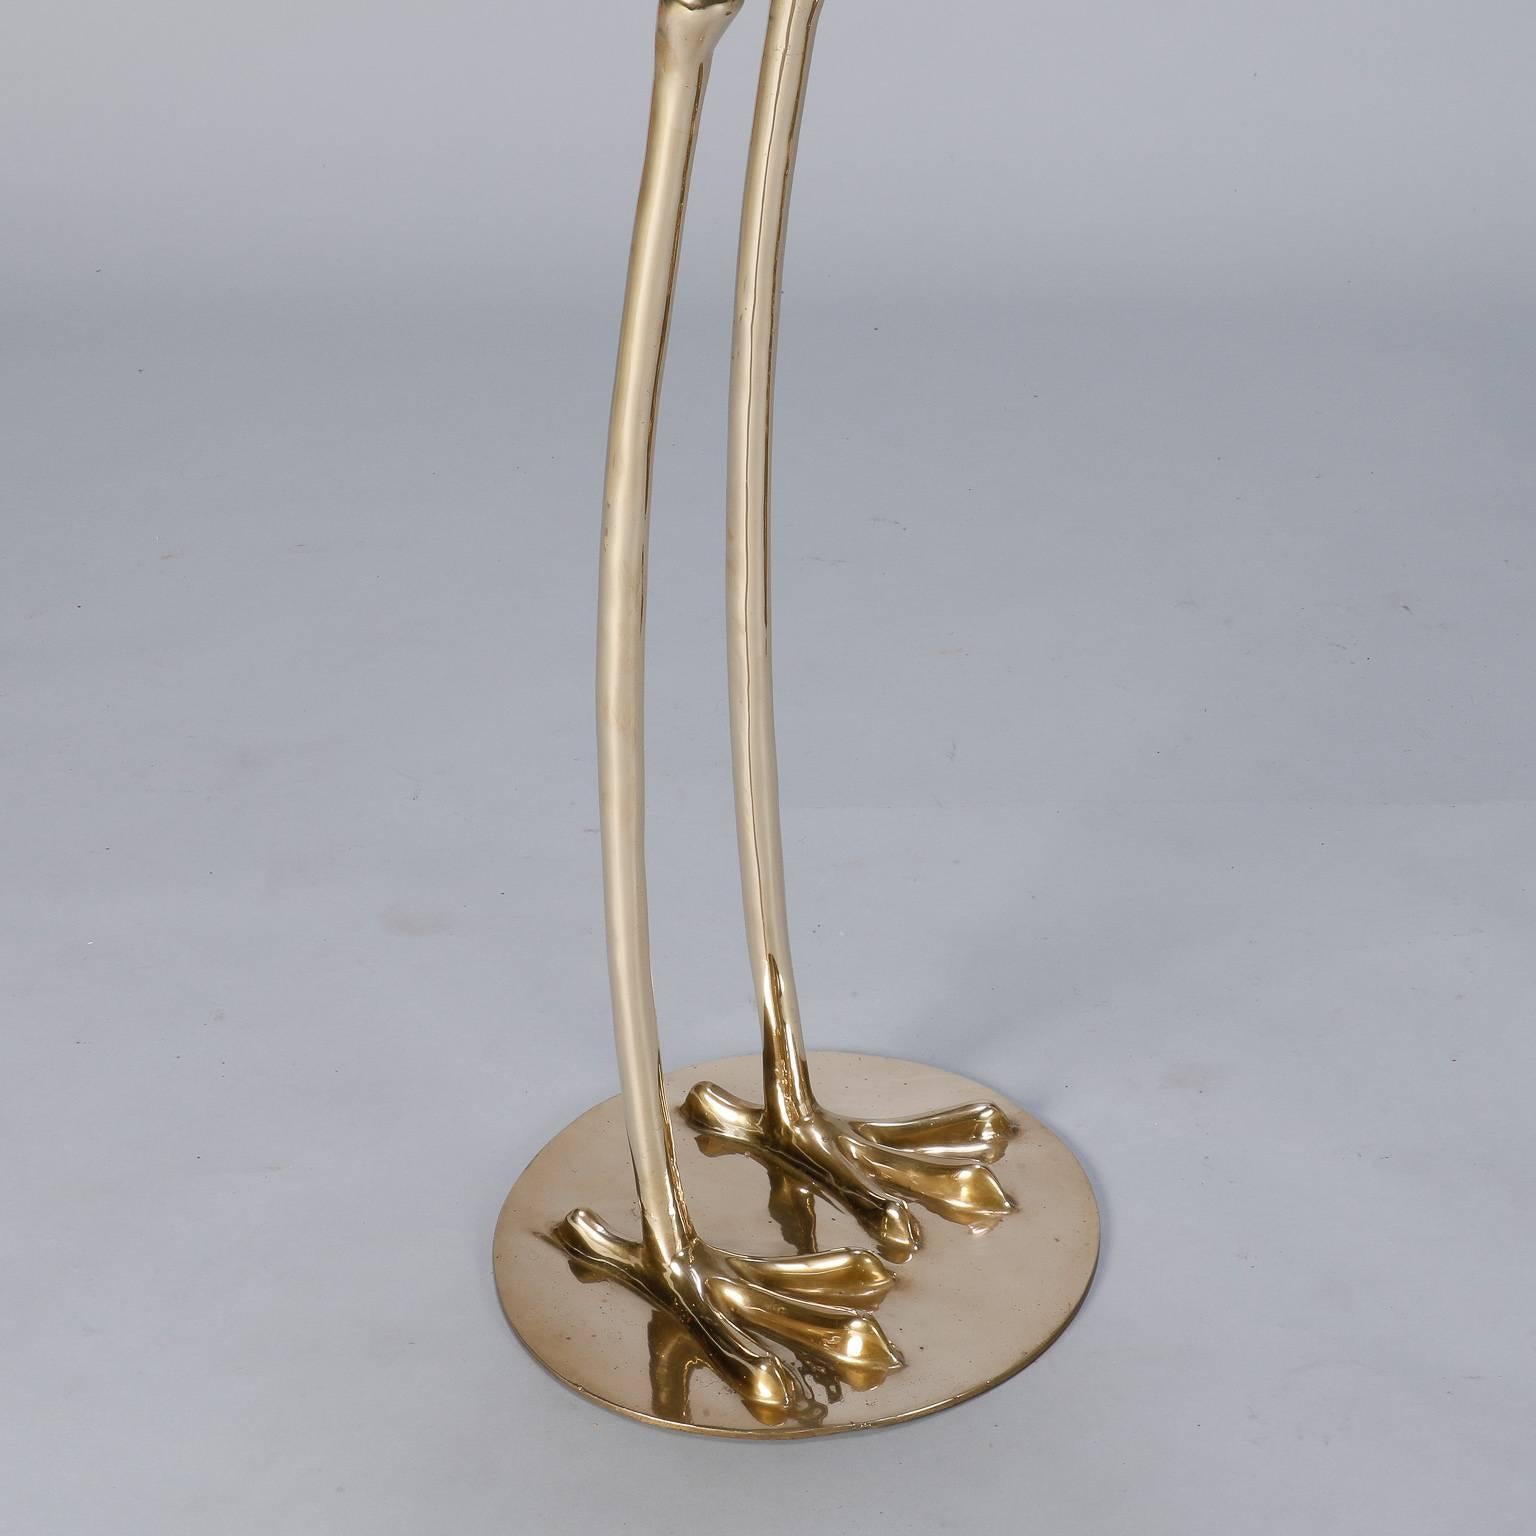 Pair of Monumental Midcentury Solid Brass Cranes 1